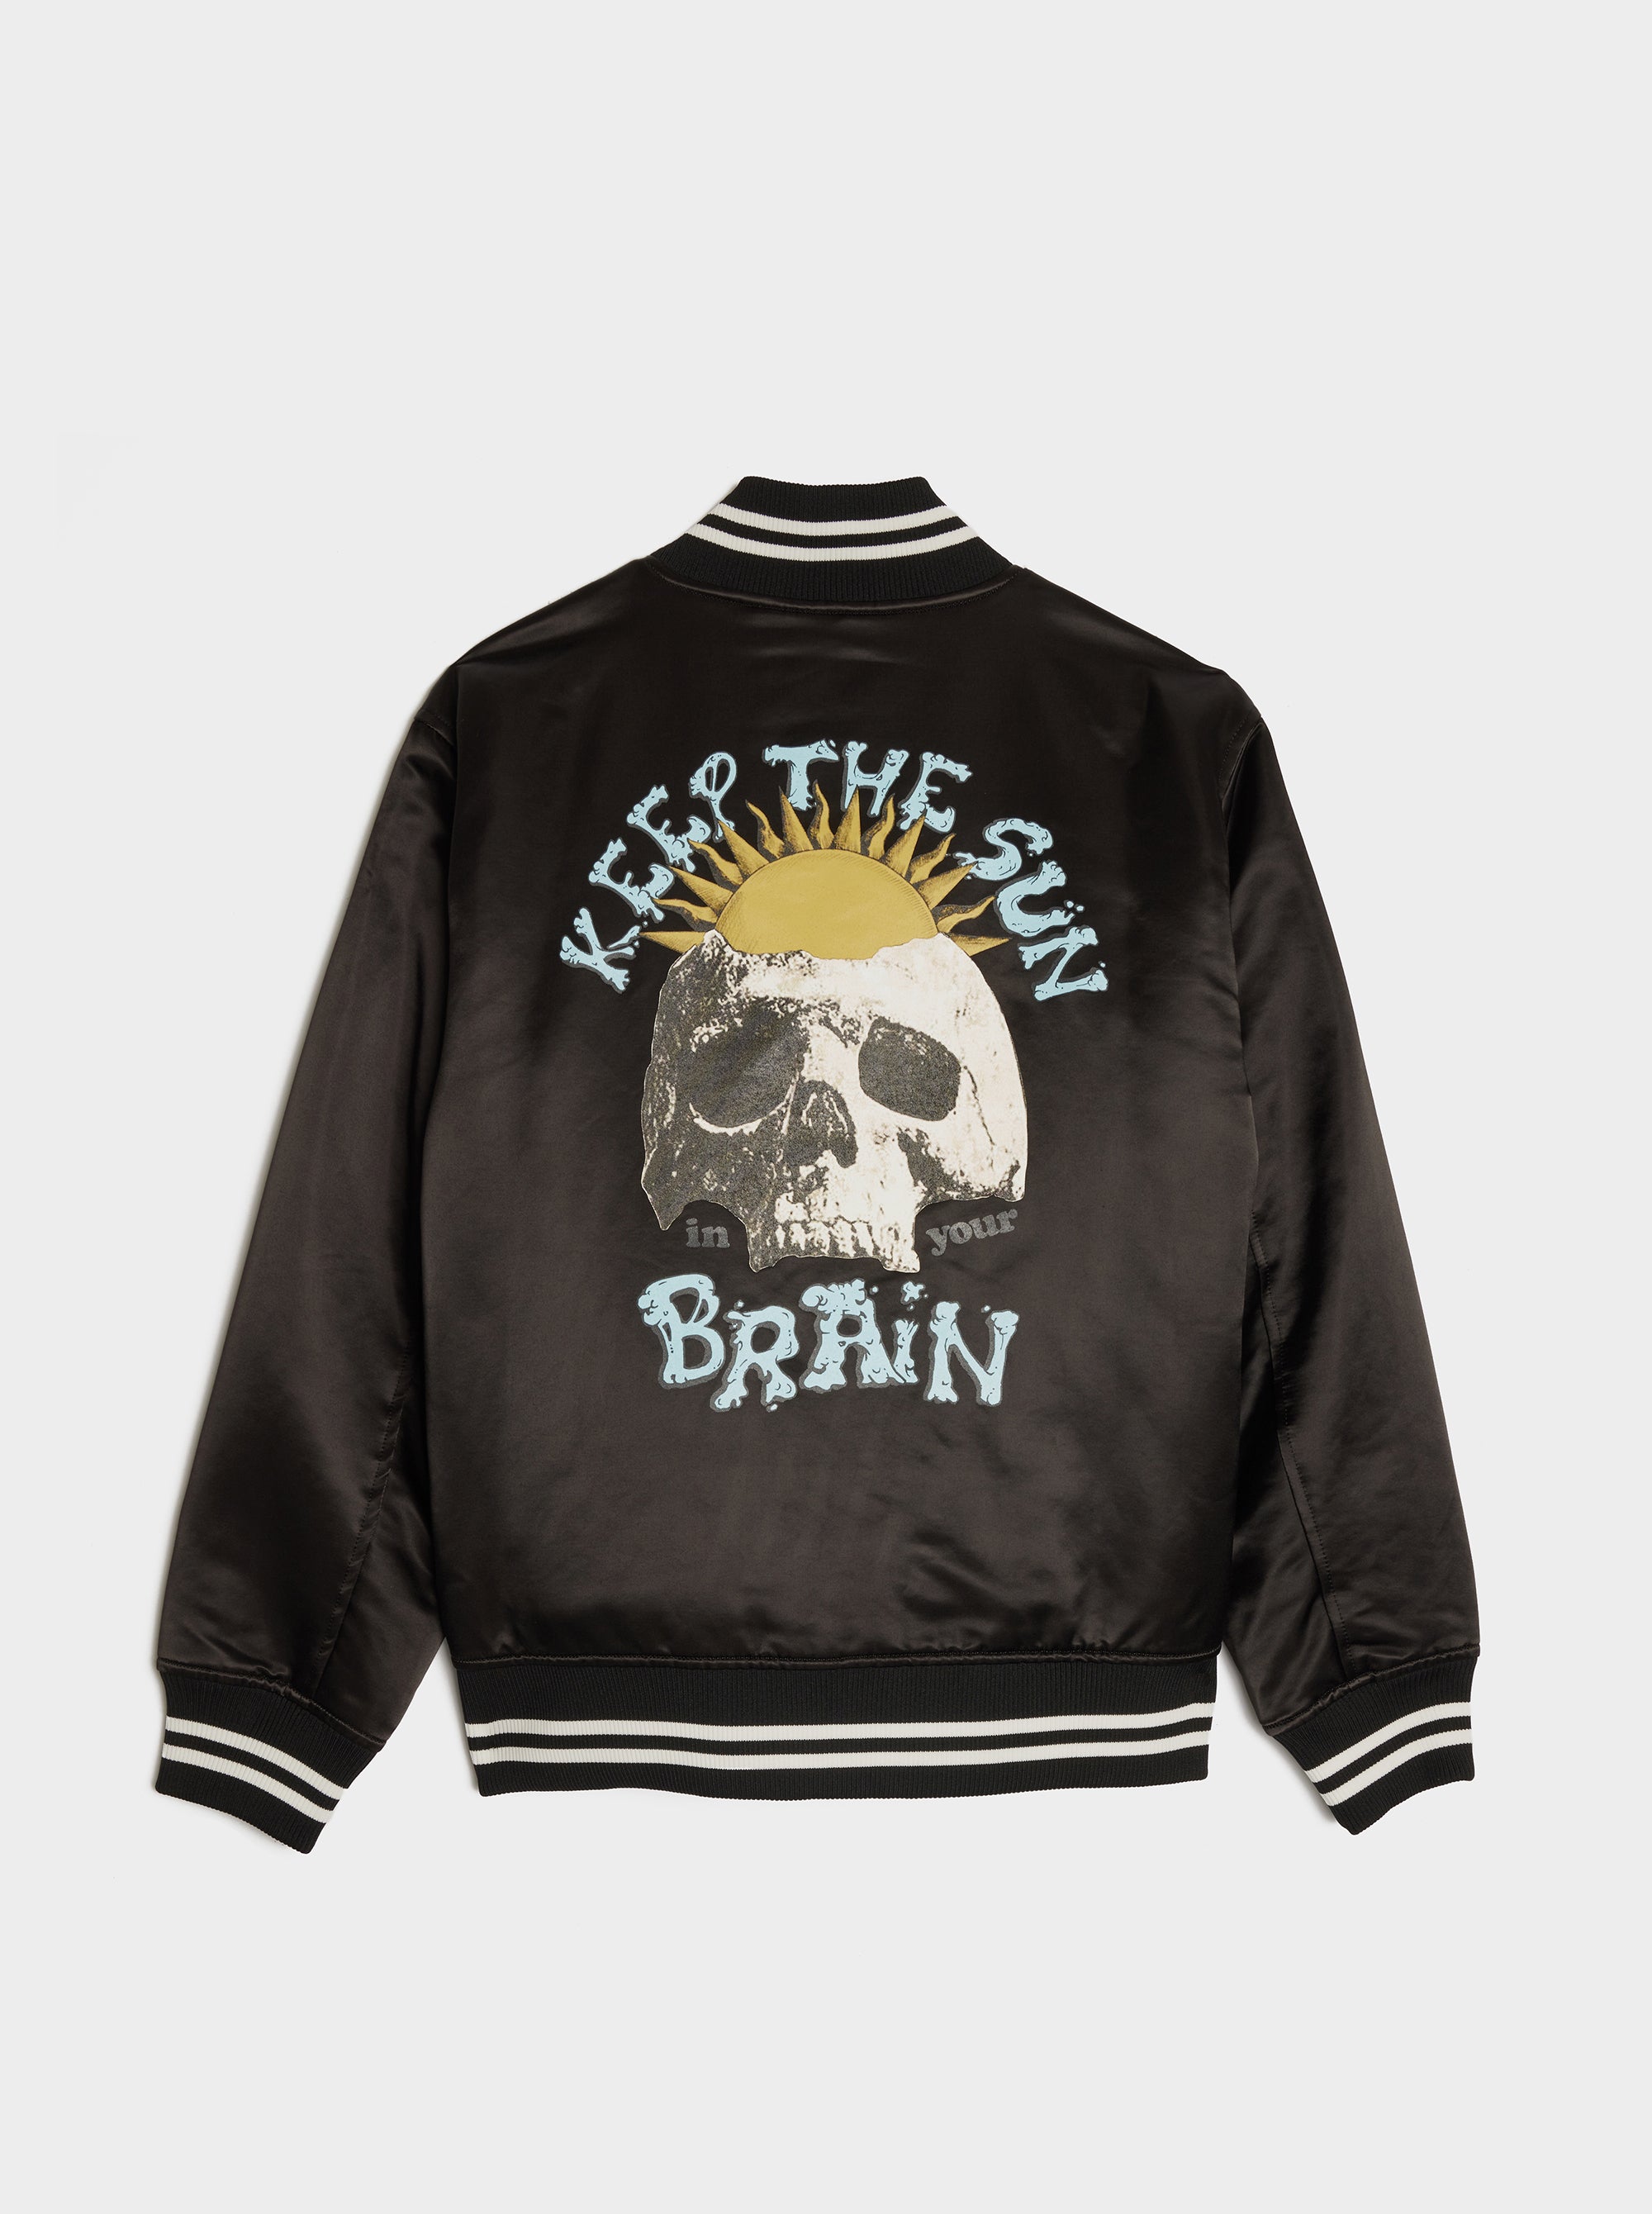 Keep The Sun Brain Jacket | Undercover | 7017 REIGN